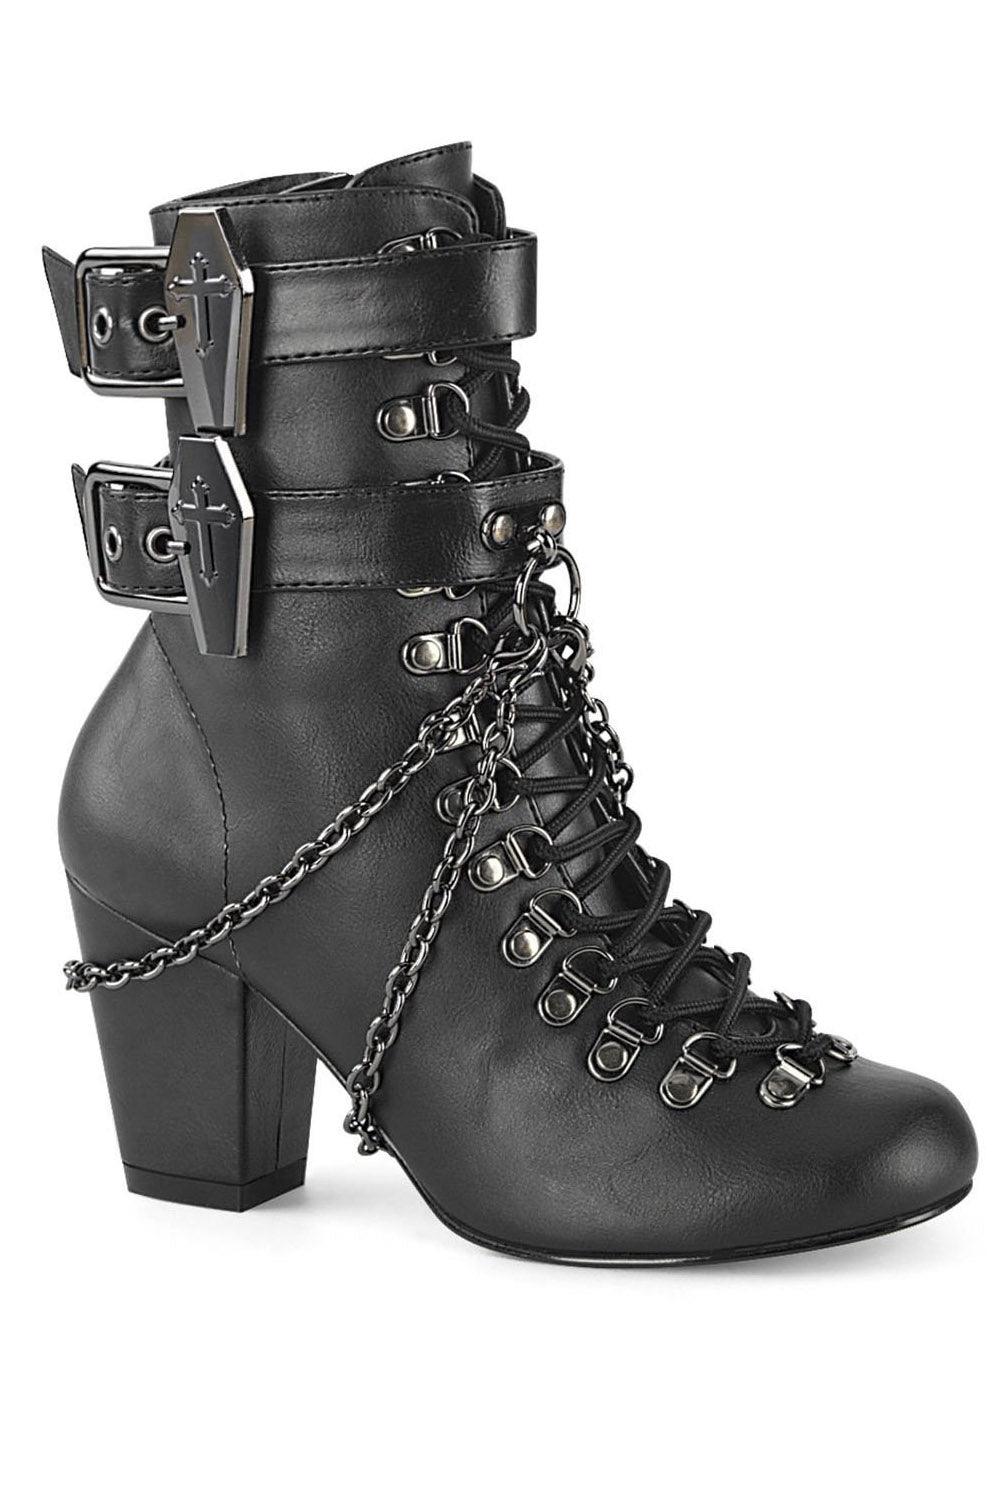 Demonia Casket Crush Ankle Boots VIK128 [Black Vegan Leather] - VampireFreaks